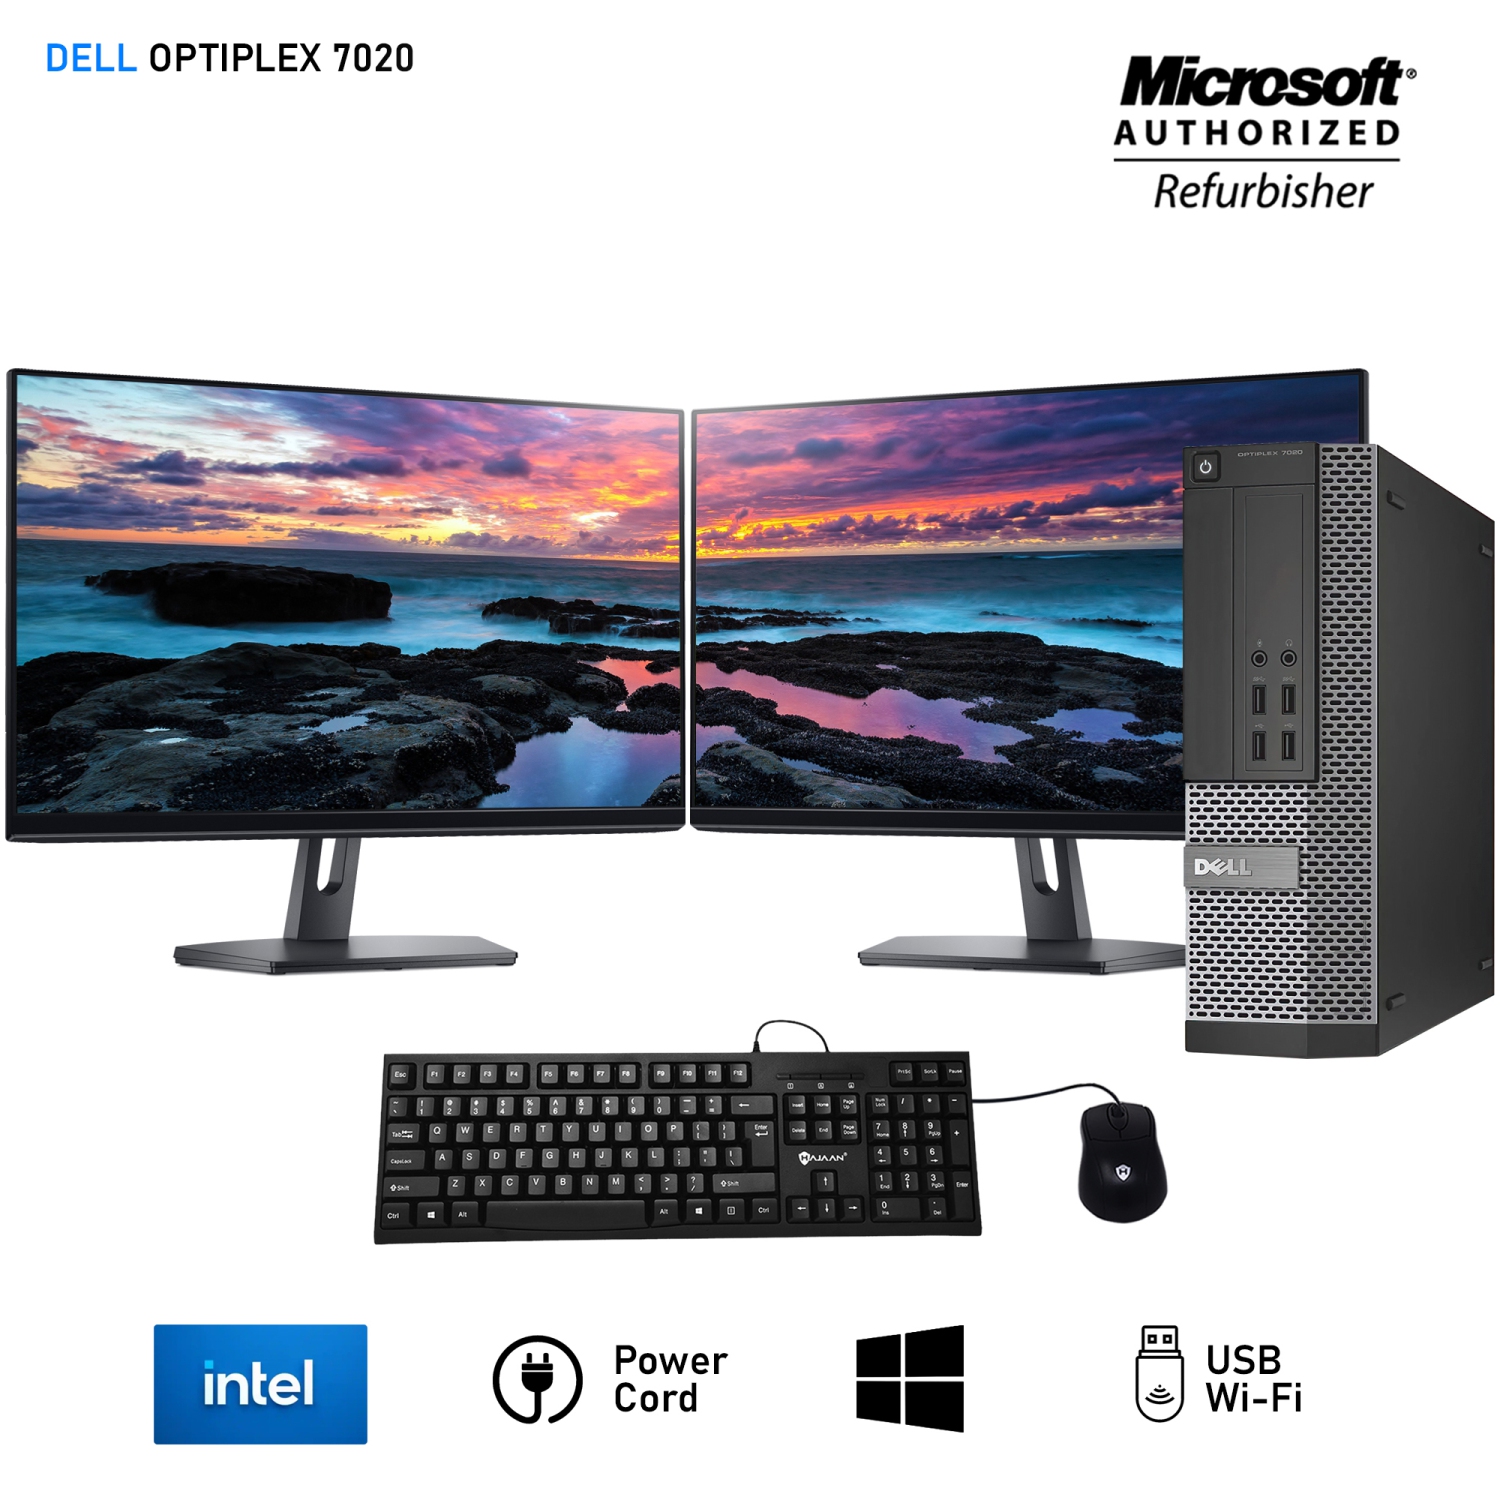 Dell OptiPlex 7020 SFF Desktop Computer with Dual (2) 20" HDMI Monitor - Intel Core i7-4770 Processor 3.40 GHz 16GB RAM 512GB SSD Windows 10 Pro WiFi Refurbished